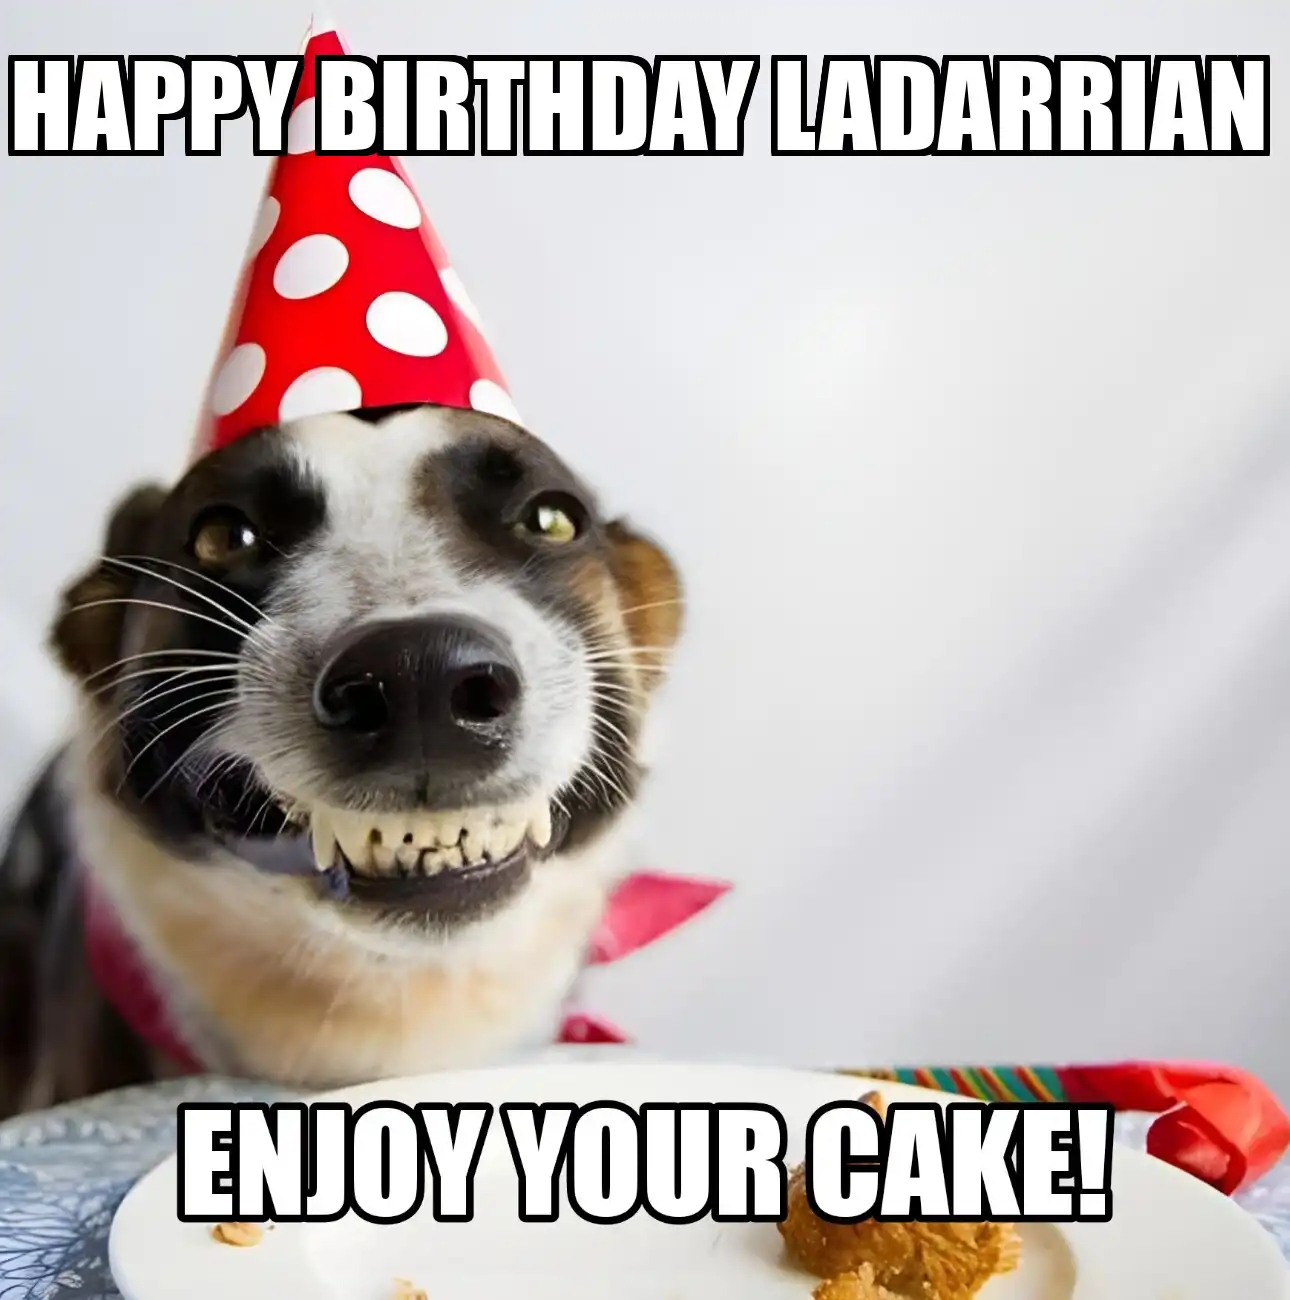 Happy Birthday Ladarrian Enjoy Your Cake Dog Meme